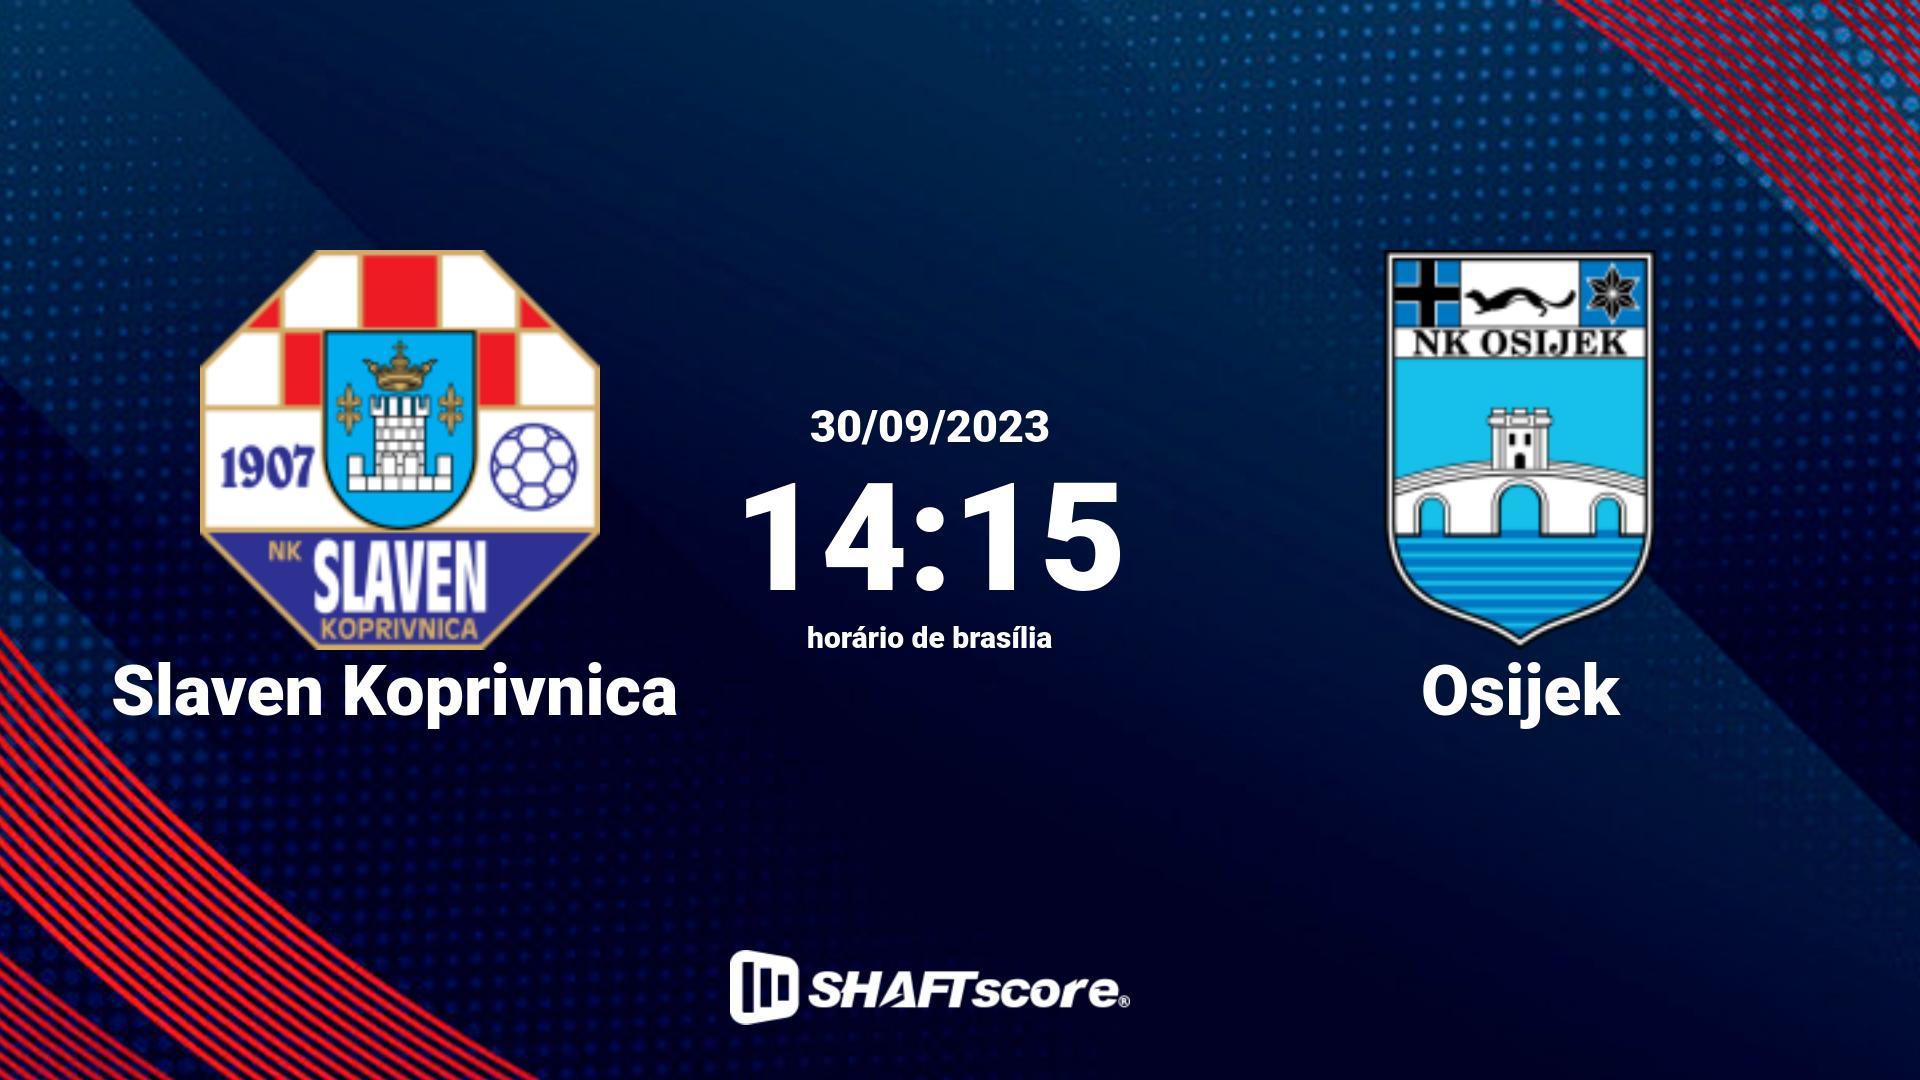 Estatísticas do jogo Slaven Koprivnica vs Osijek 30.09 14:15